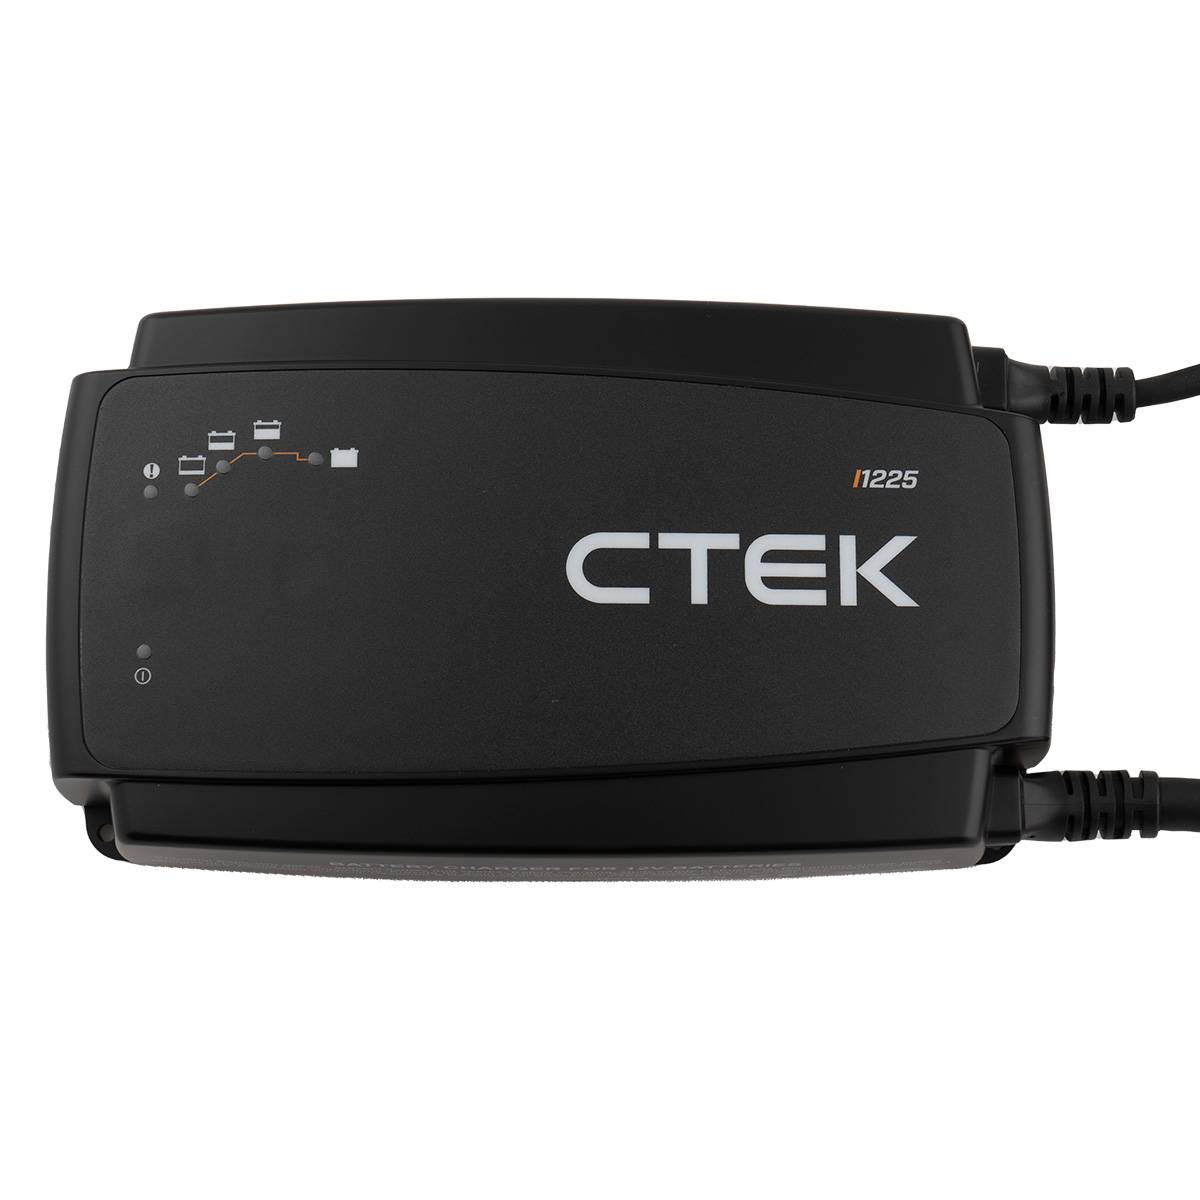 CTEK Ladekabel mit 12V KFZ Anschluss und LED Batterie Statusanzeige - CTEK  Batte